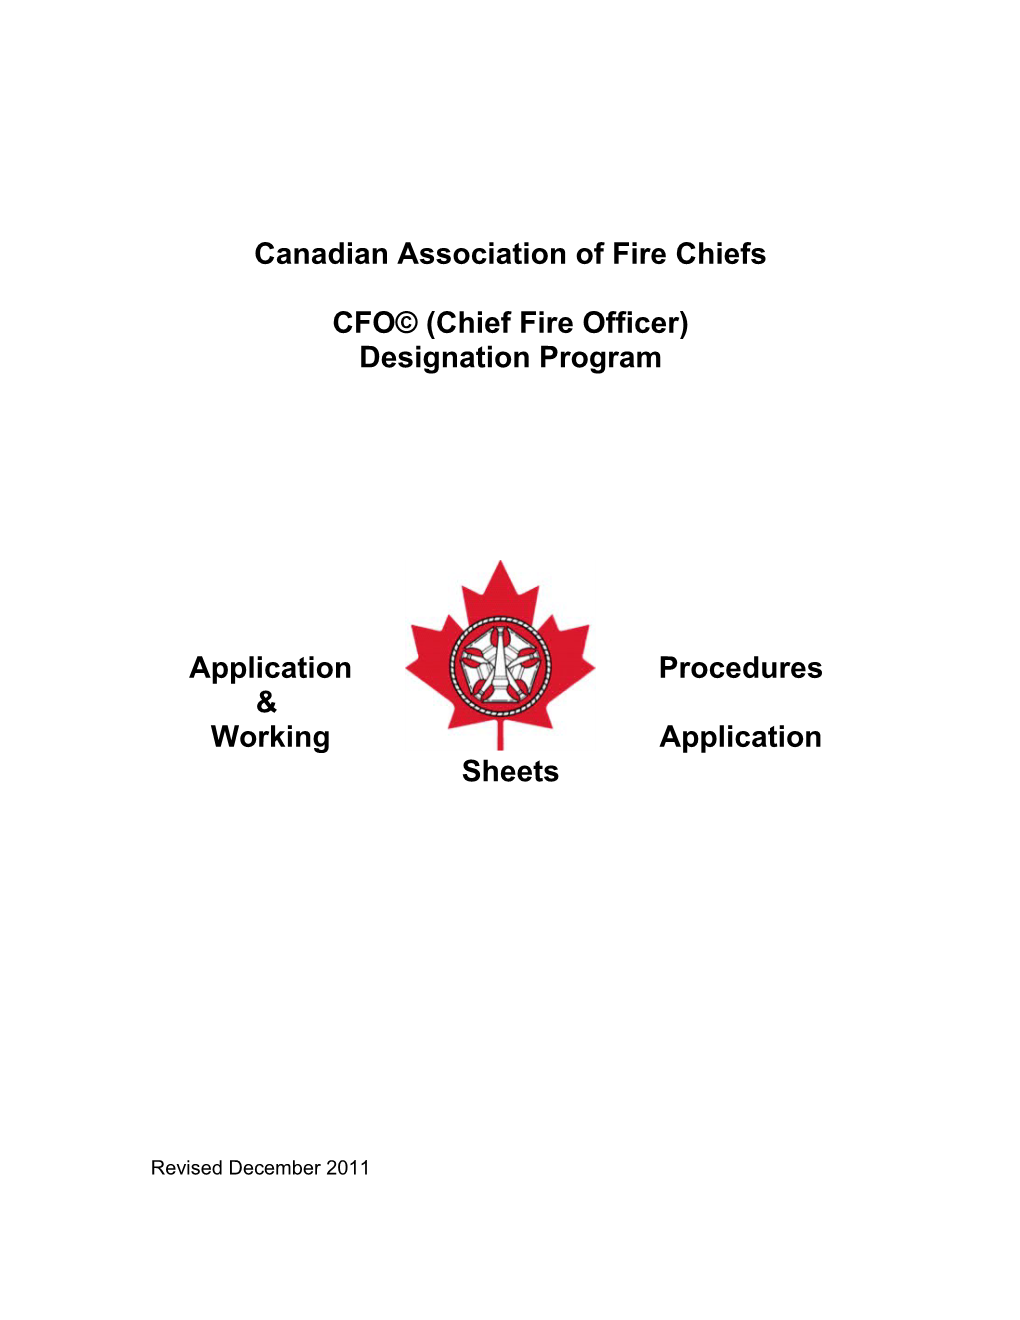 CFO (Chief Fire Officer)